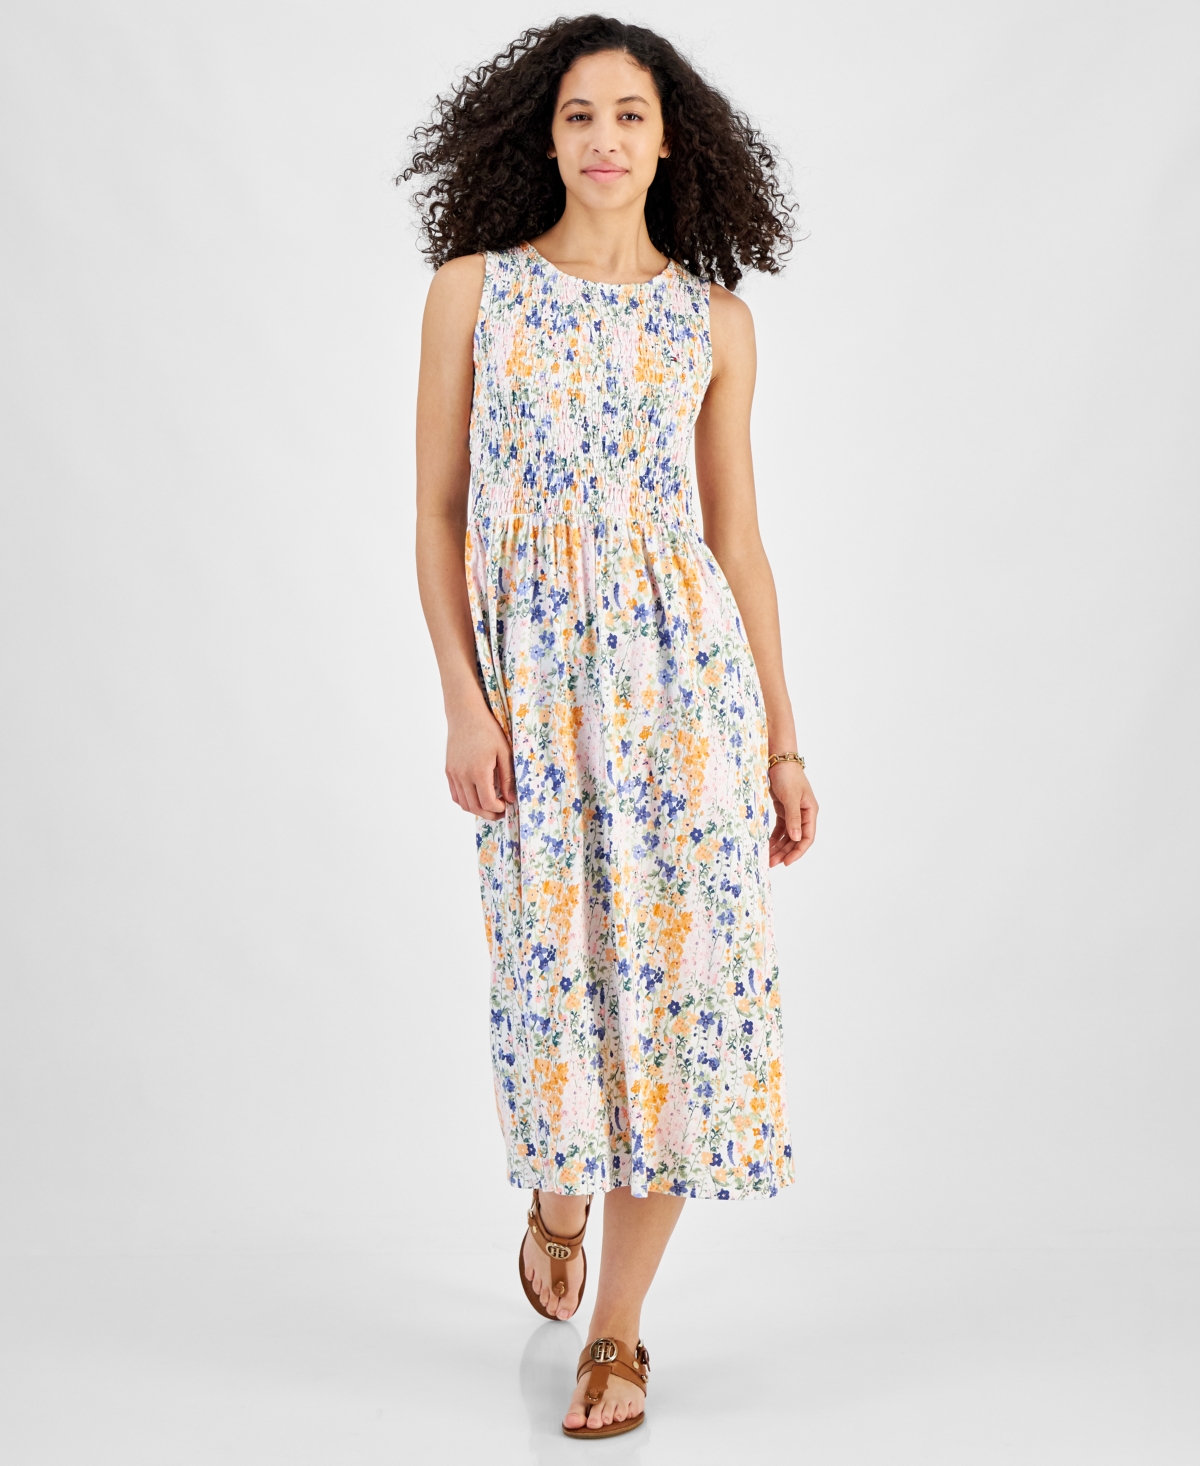 Women's Floral Print Smocked Sleeveless Midi Dress - Breeze Mlt